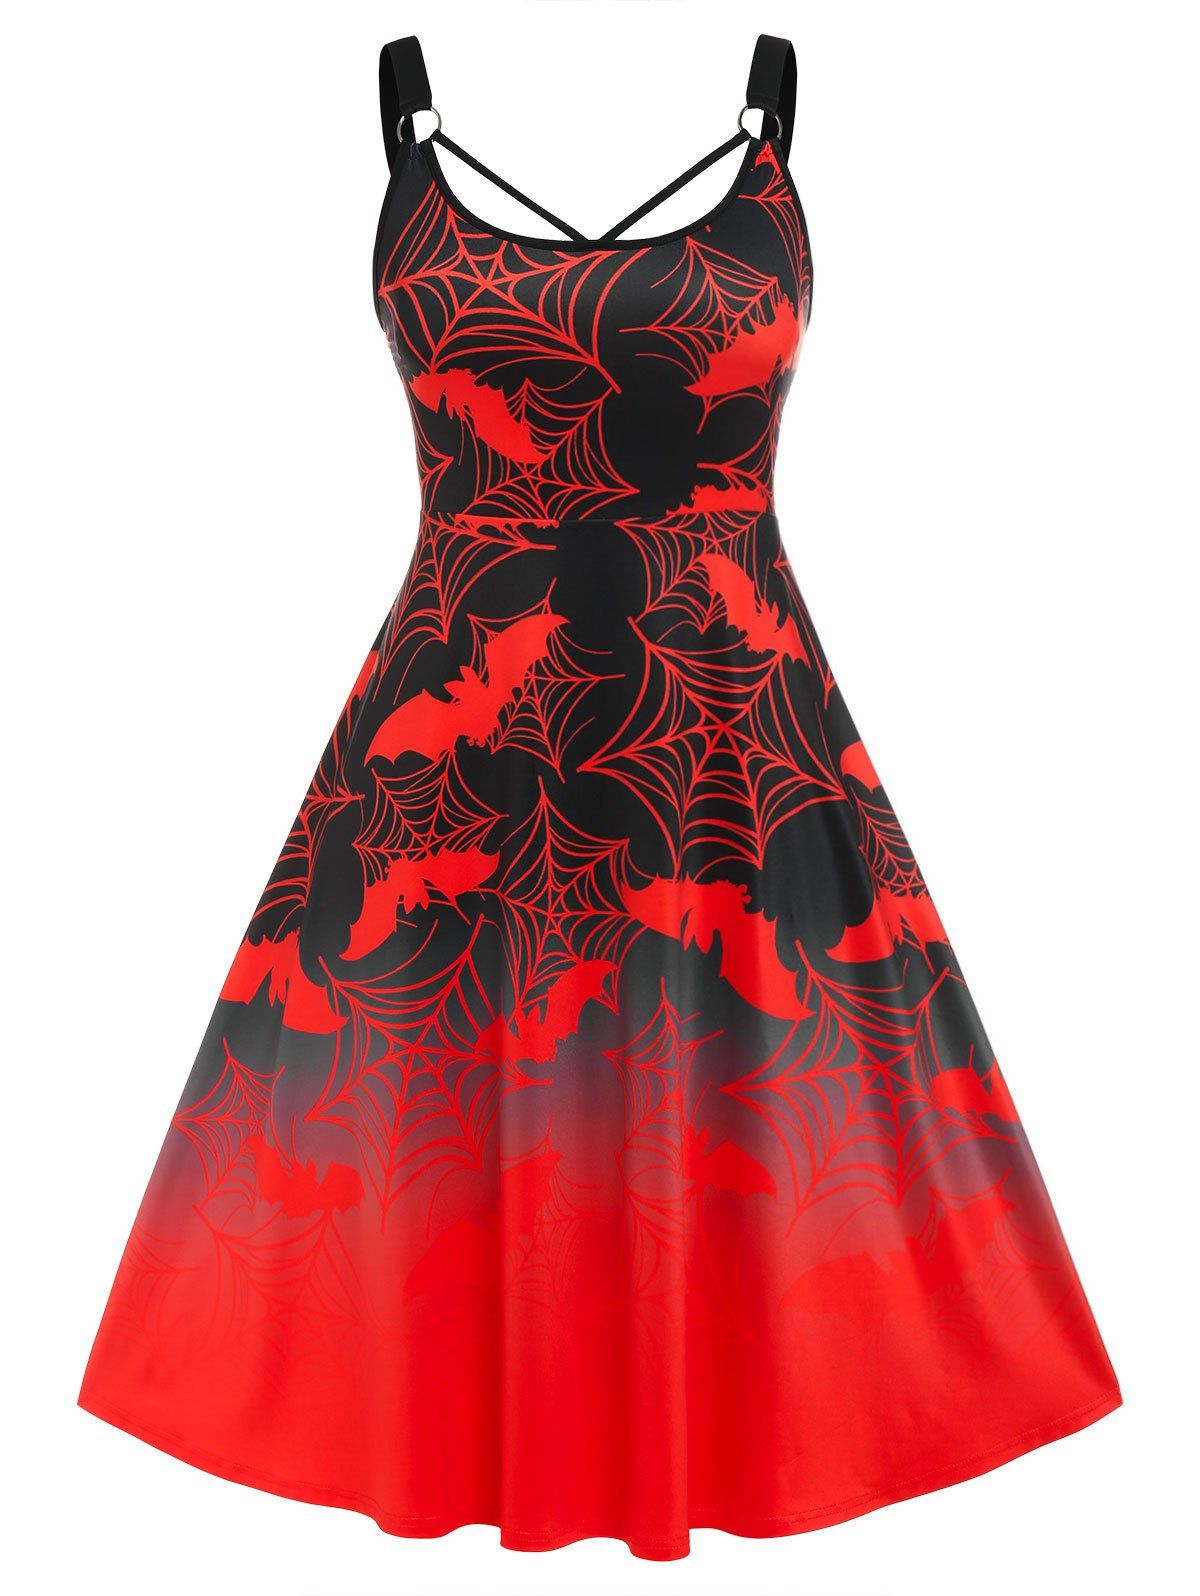 Plus Size Bat Spider Web Print Halloween Dress - RED 4X